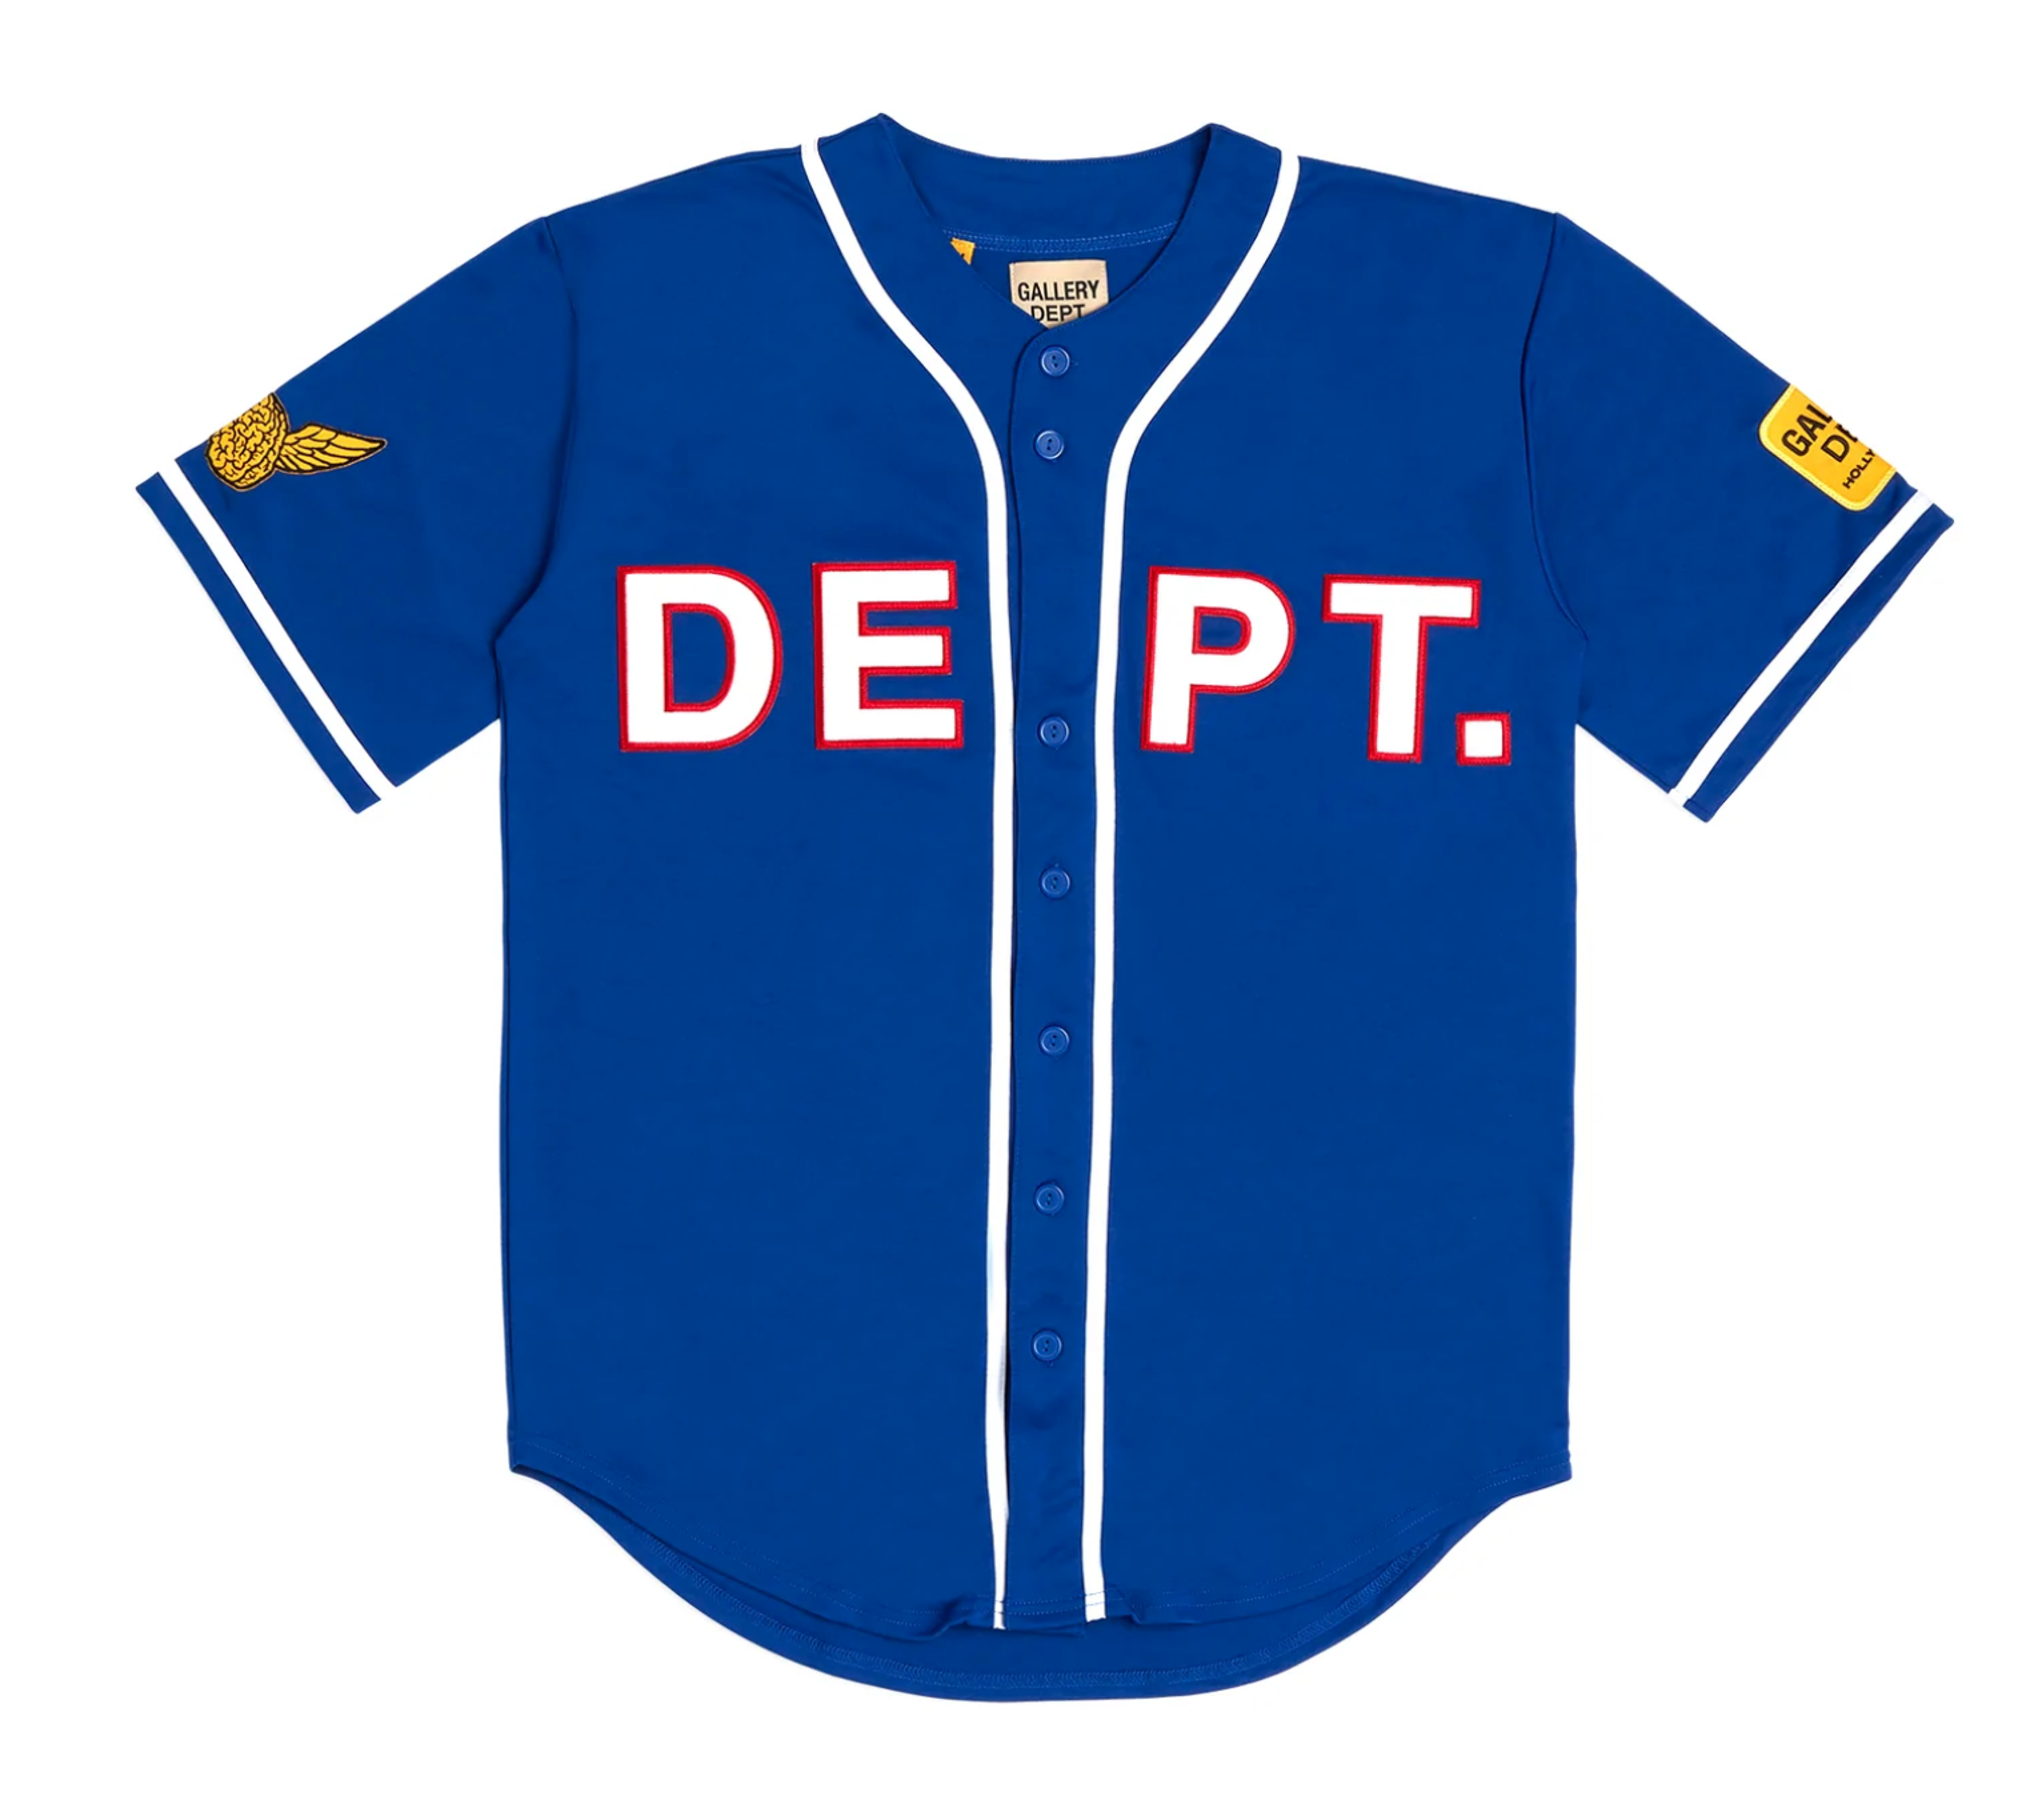 Gallery Department Echo Park Baseball Jersey Blue